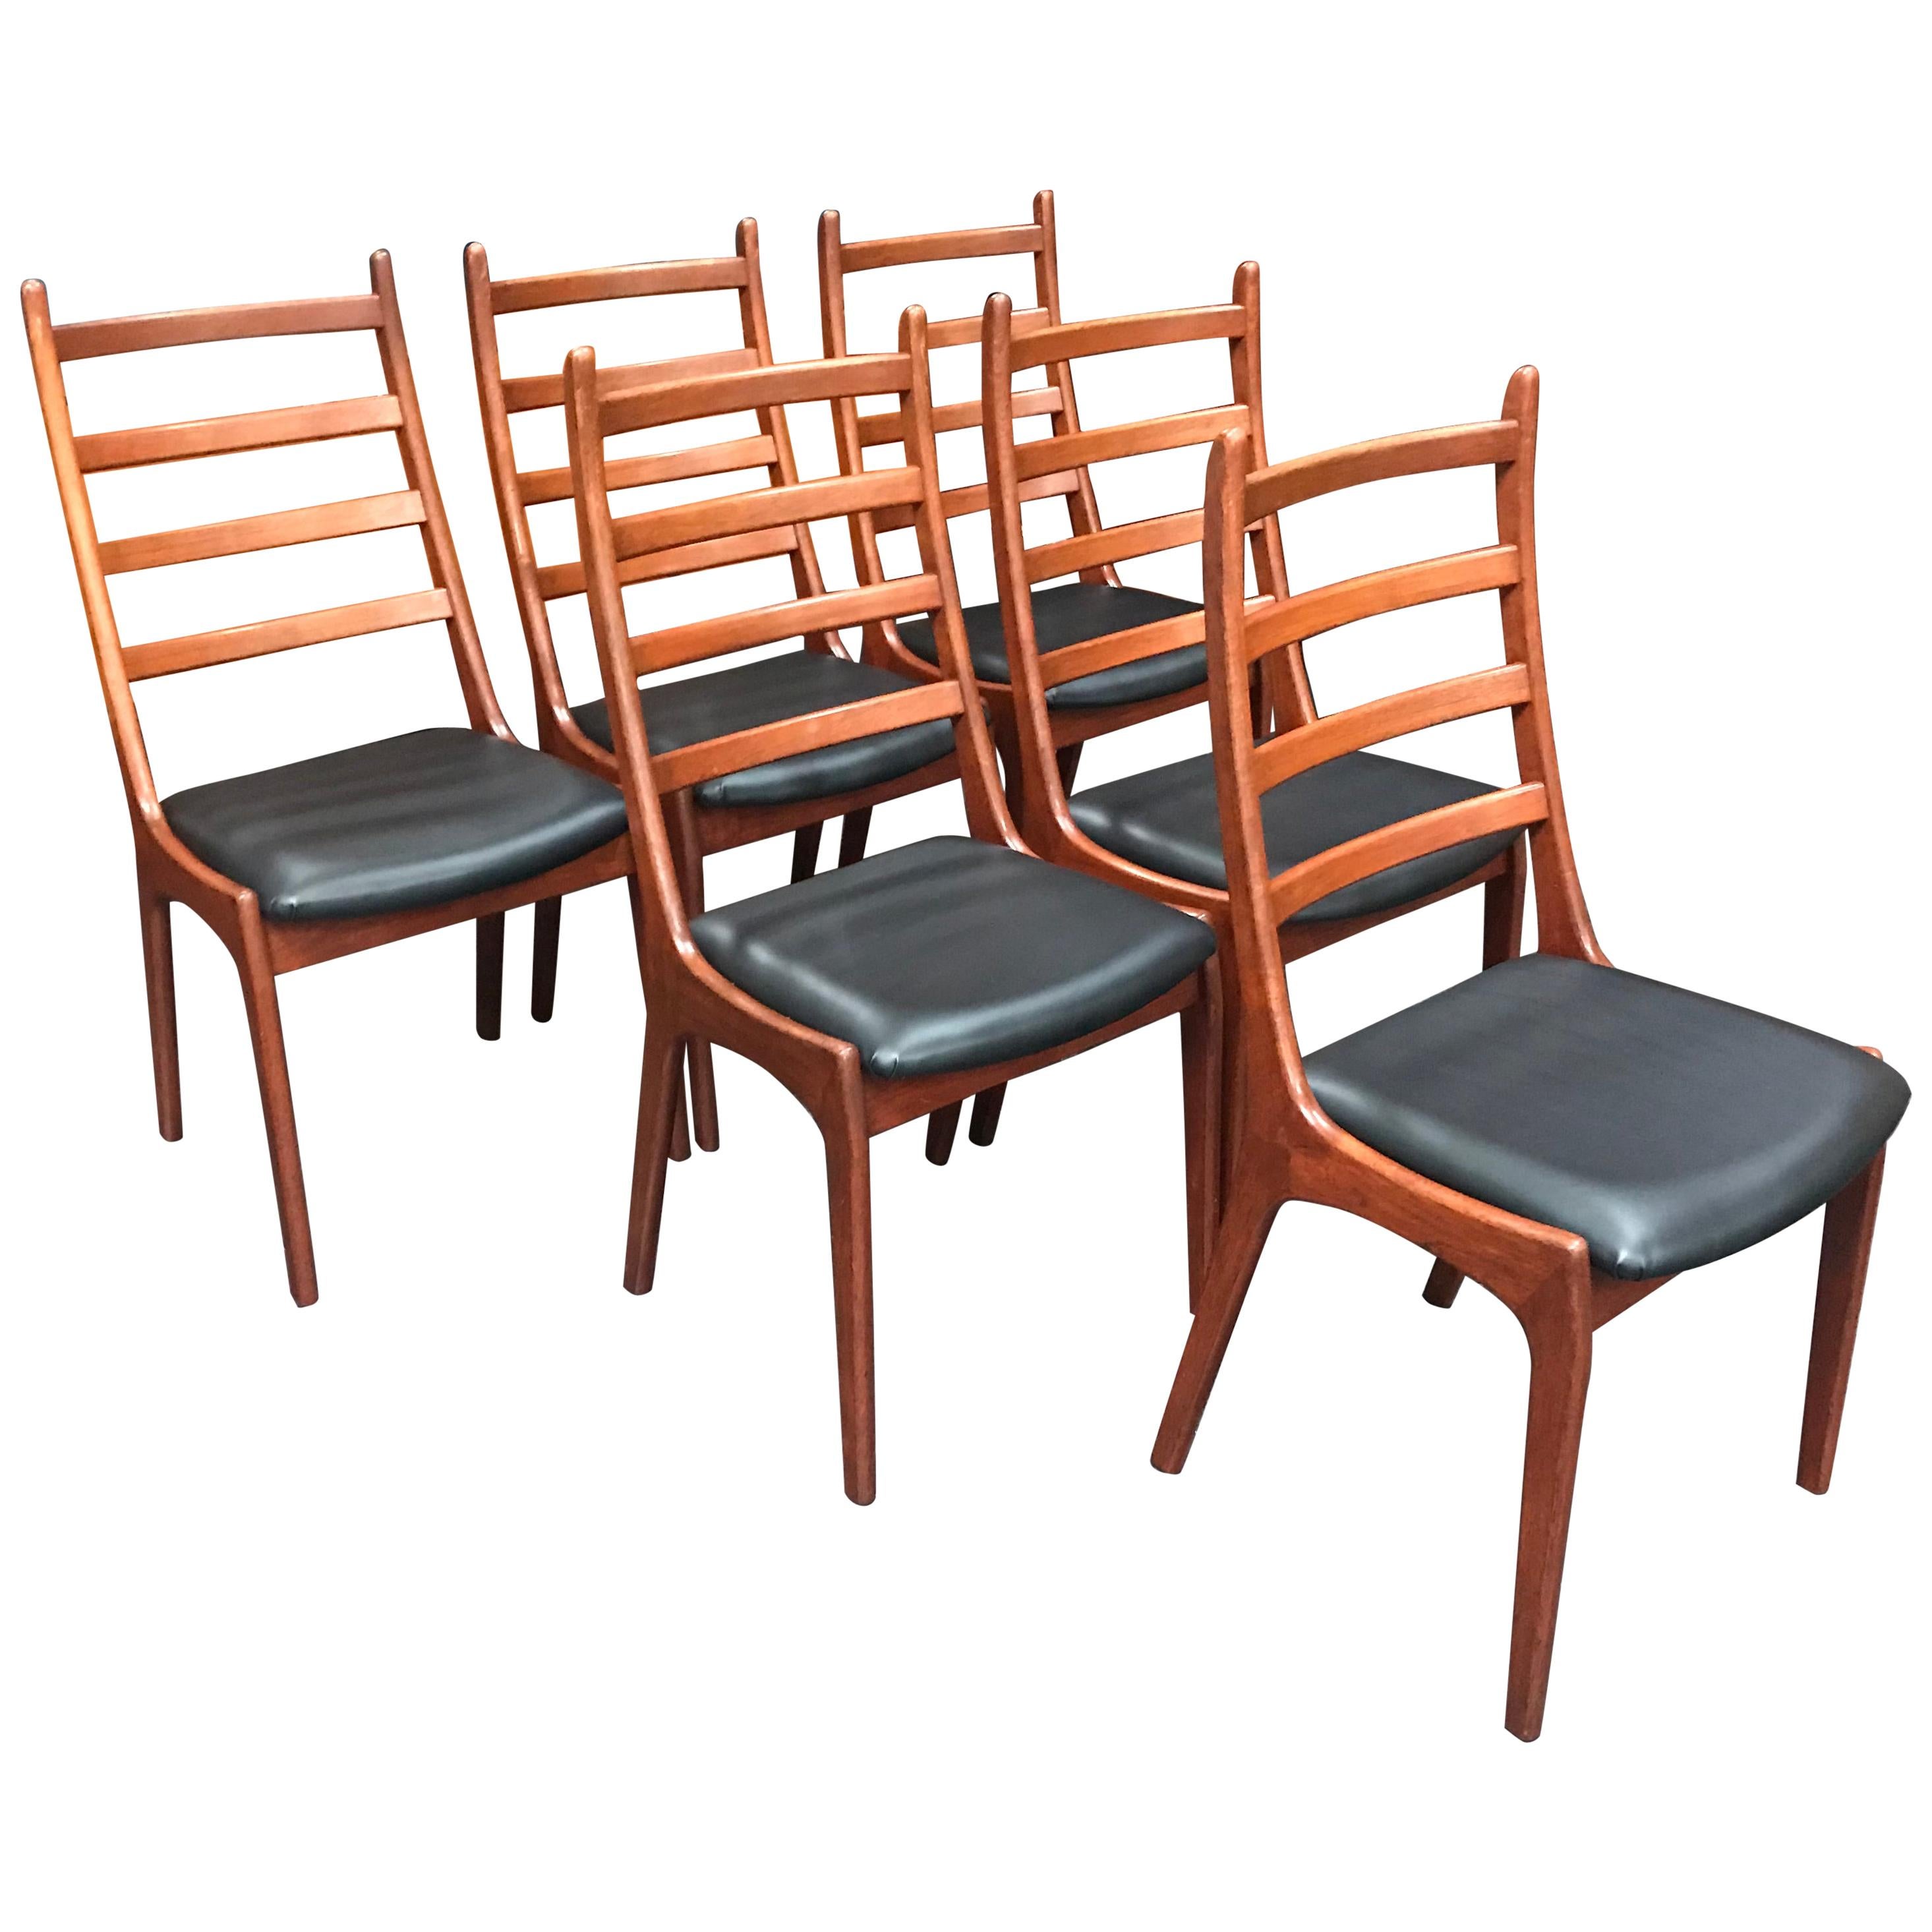 Kai Kristiansen Danish Teak Dining Chairs with Black Vinyl Seat Pads, Set of 6 For Sale